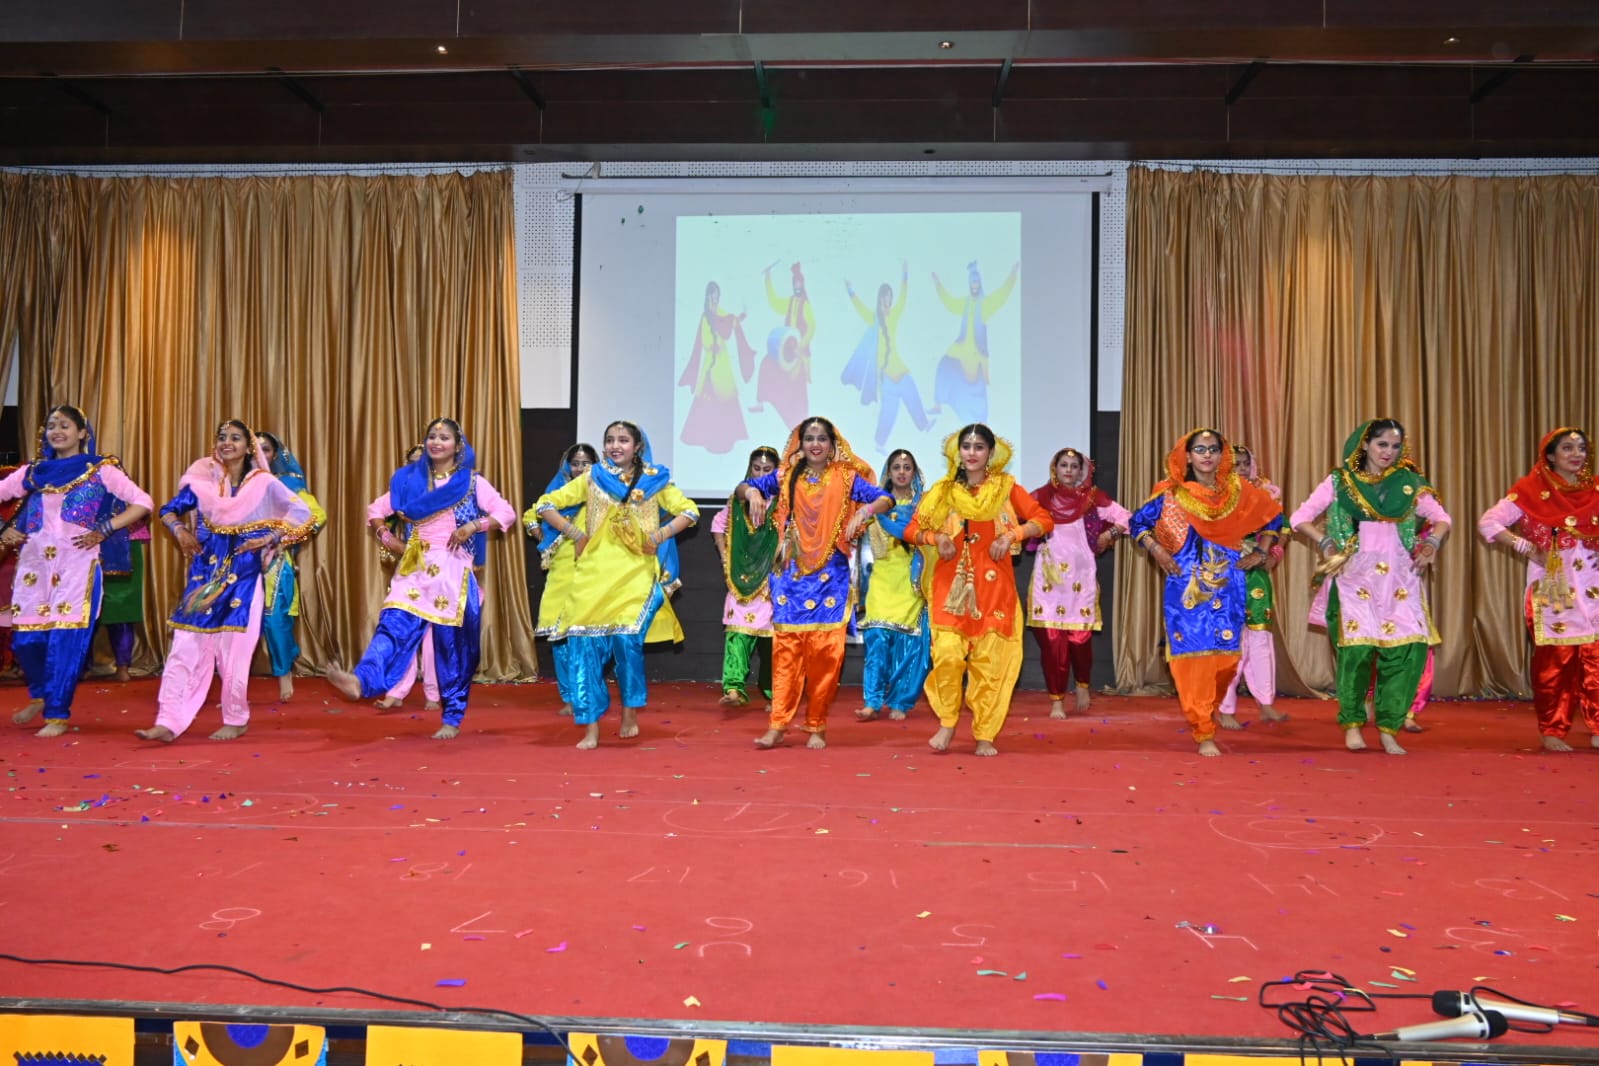 Bhartiya Vidya Mandir , kitchlu Nagar, Ludhiana successfully concludes enriching Summer Workshops for students